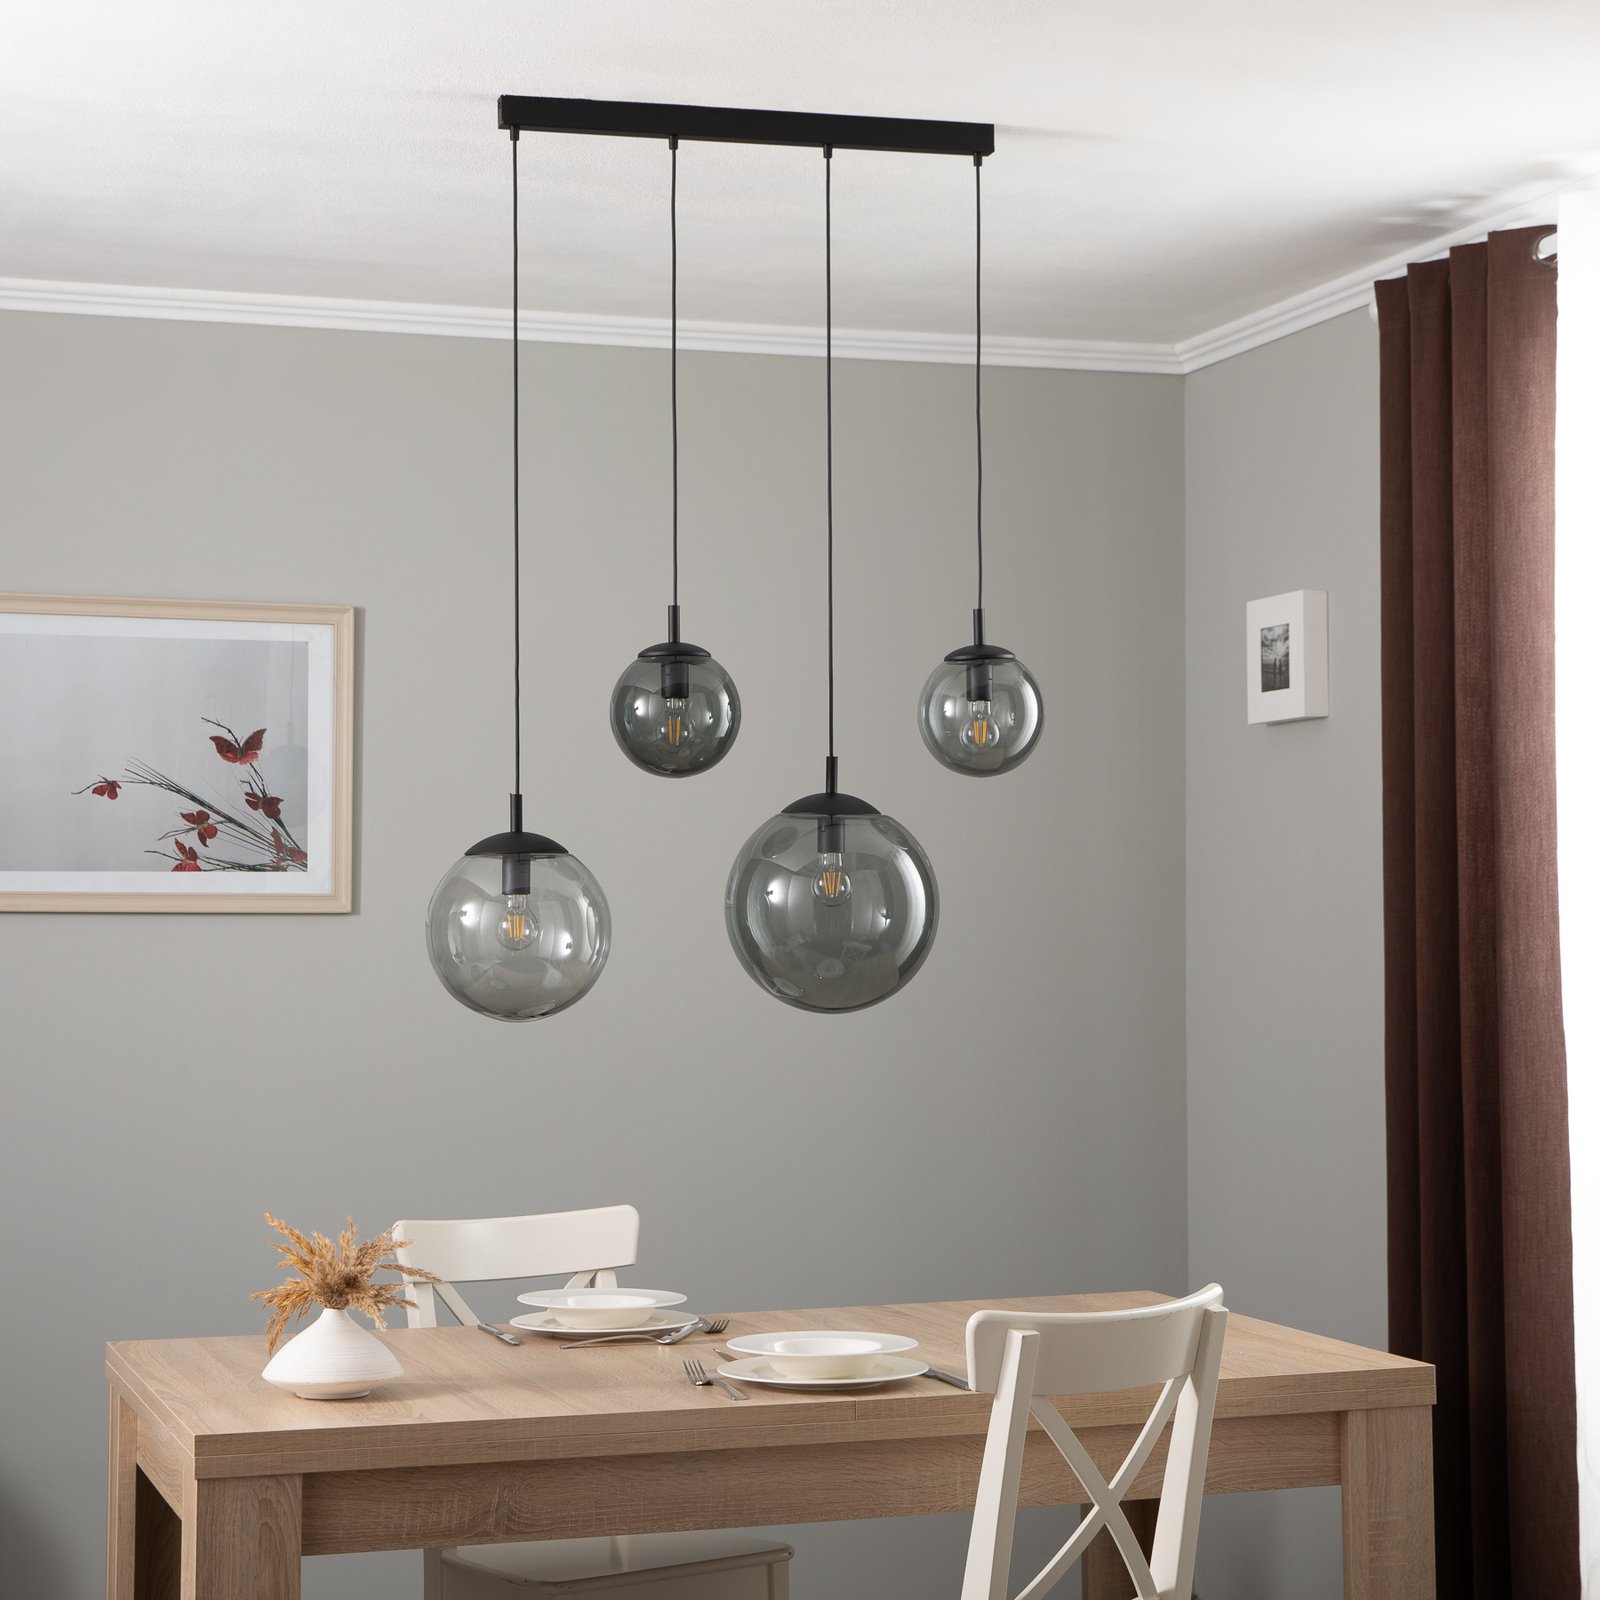 Hanglamp Esme, glas, grafiet-transparant, 4-lamps, lineair